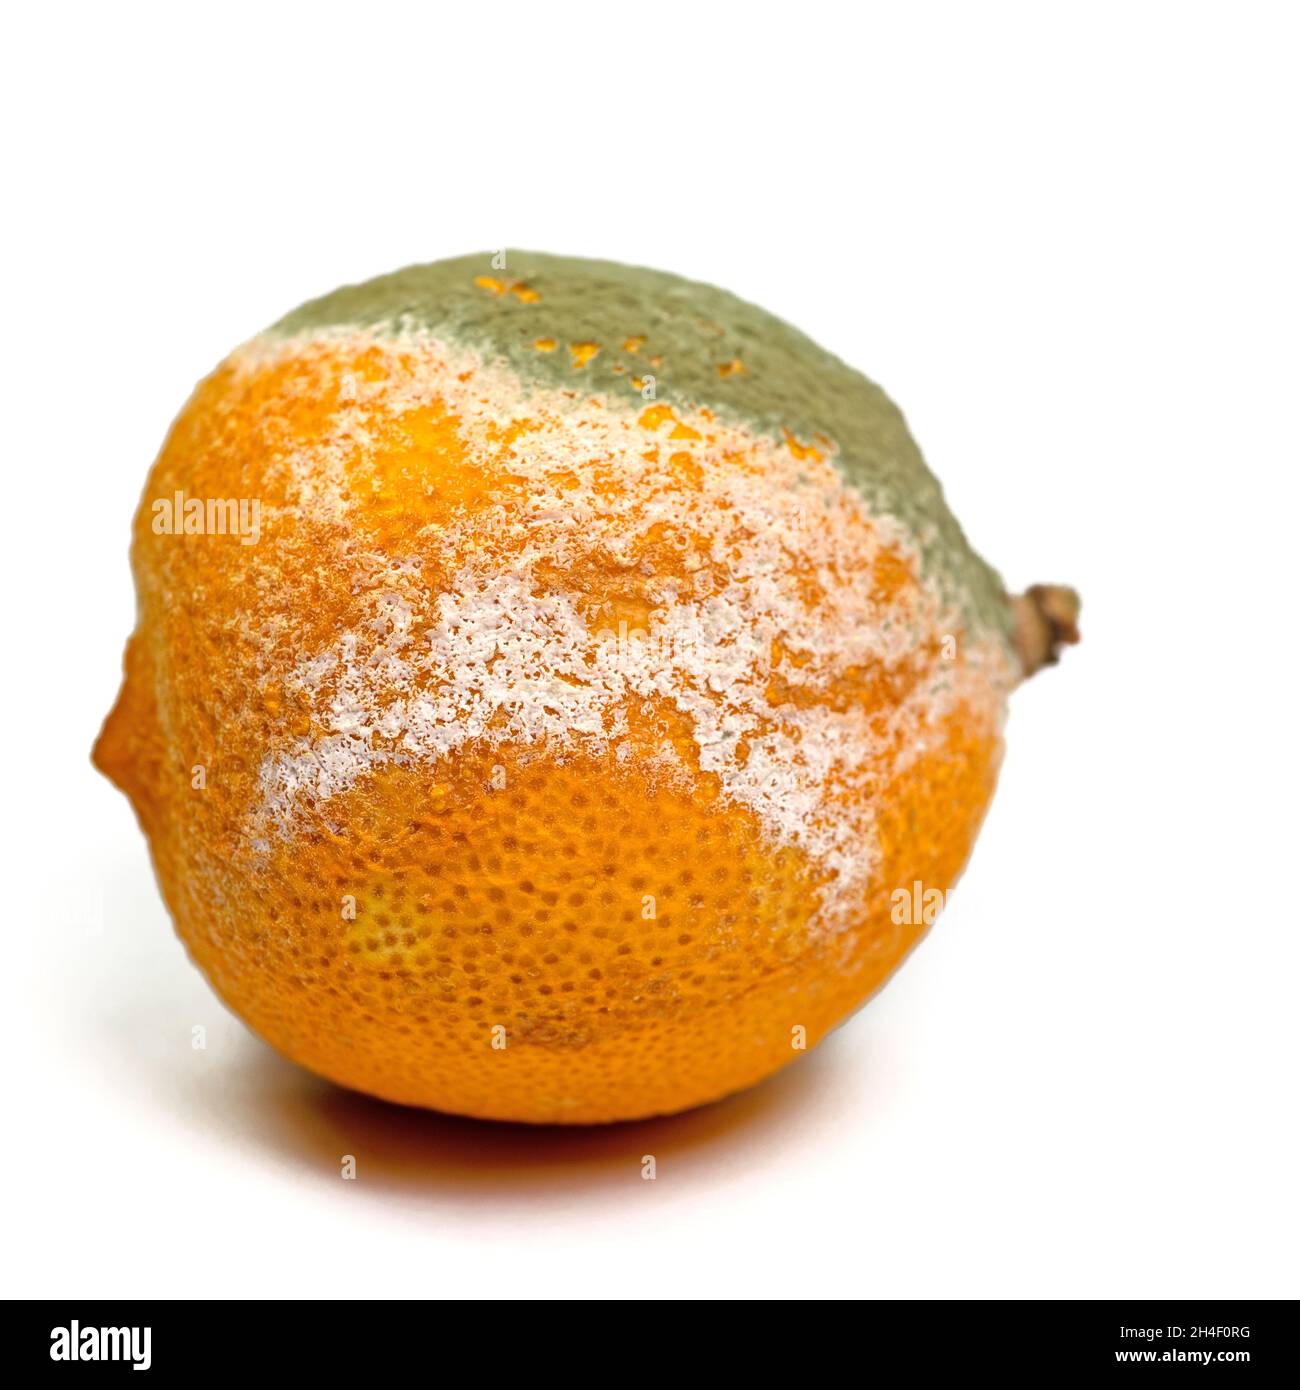 Moldy lemon against white background Stock Photo